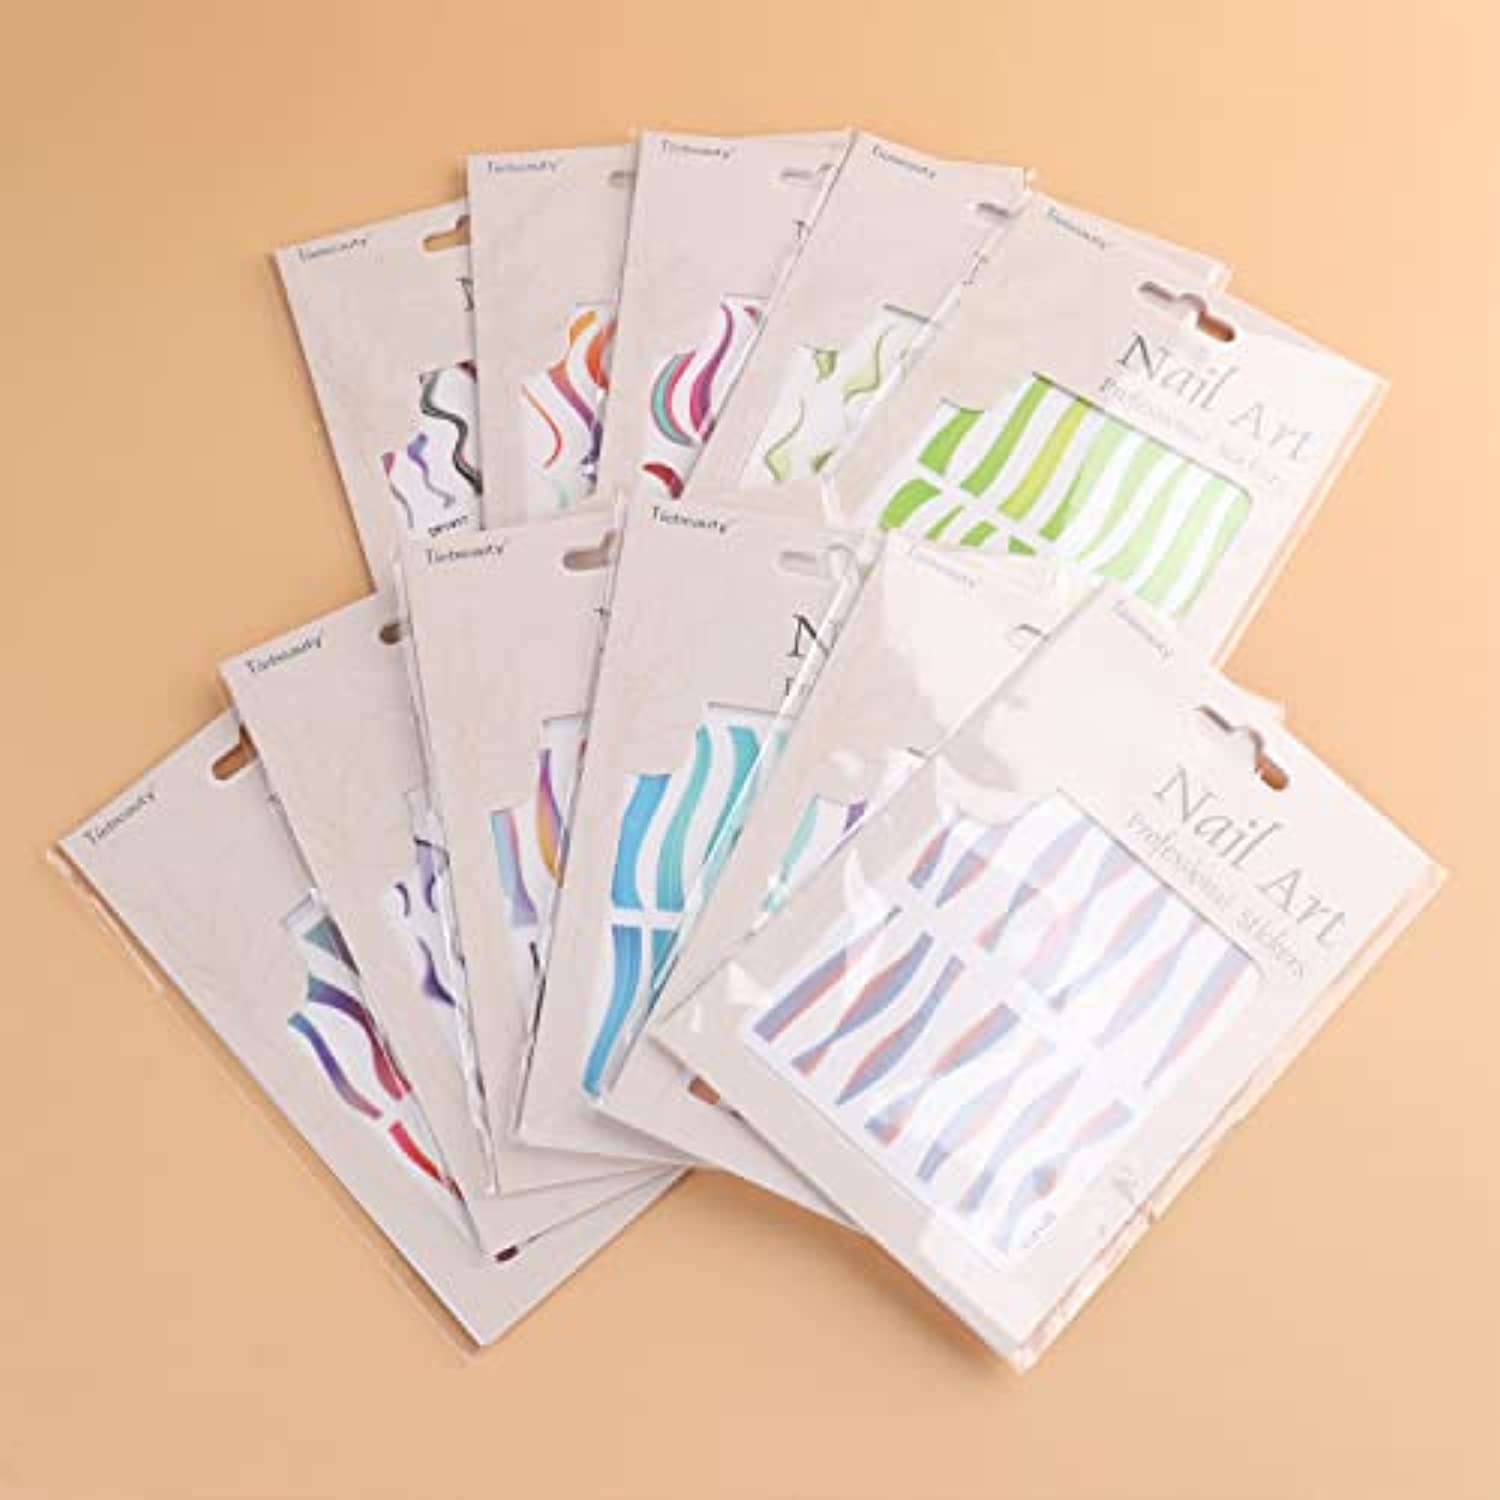 12 Sheets Colorful Wavy Lines Nail Art Stickers Design Ballet Streamer Wavy Line DIY Nail Supplies Nail Art Decoration Kit for Women Girls